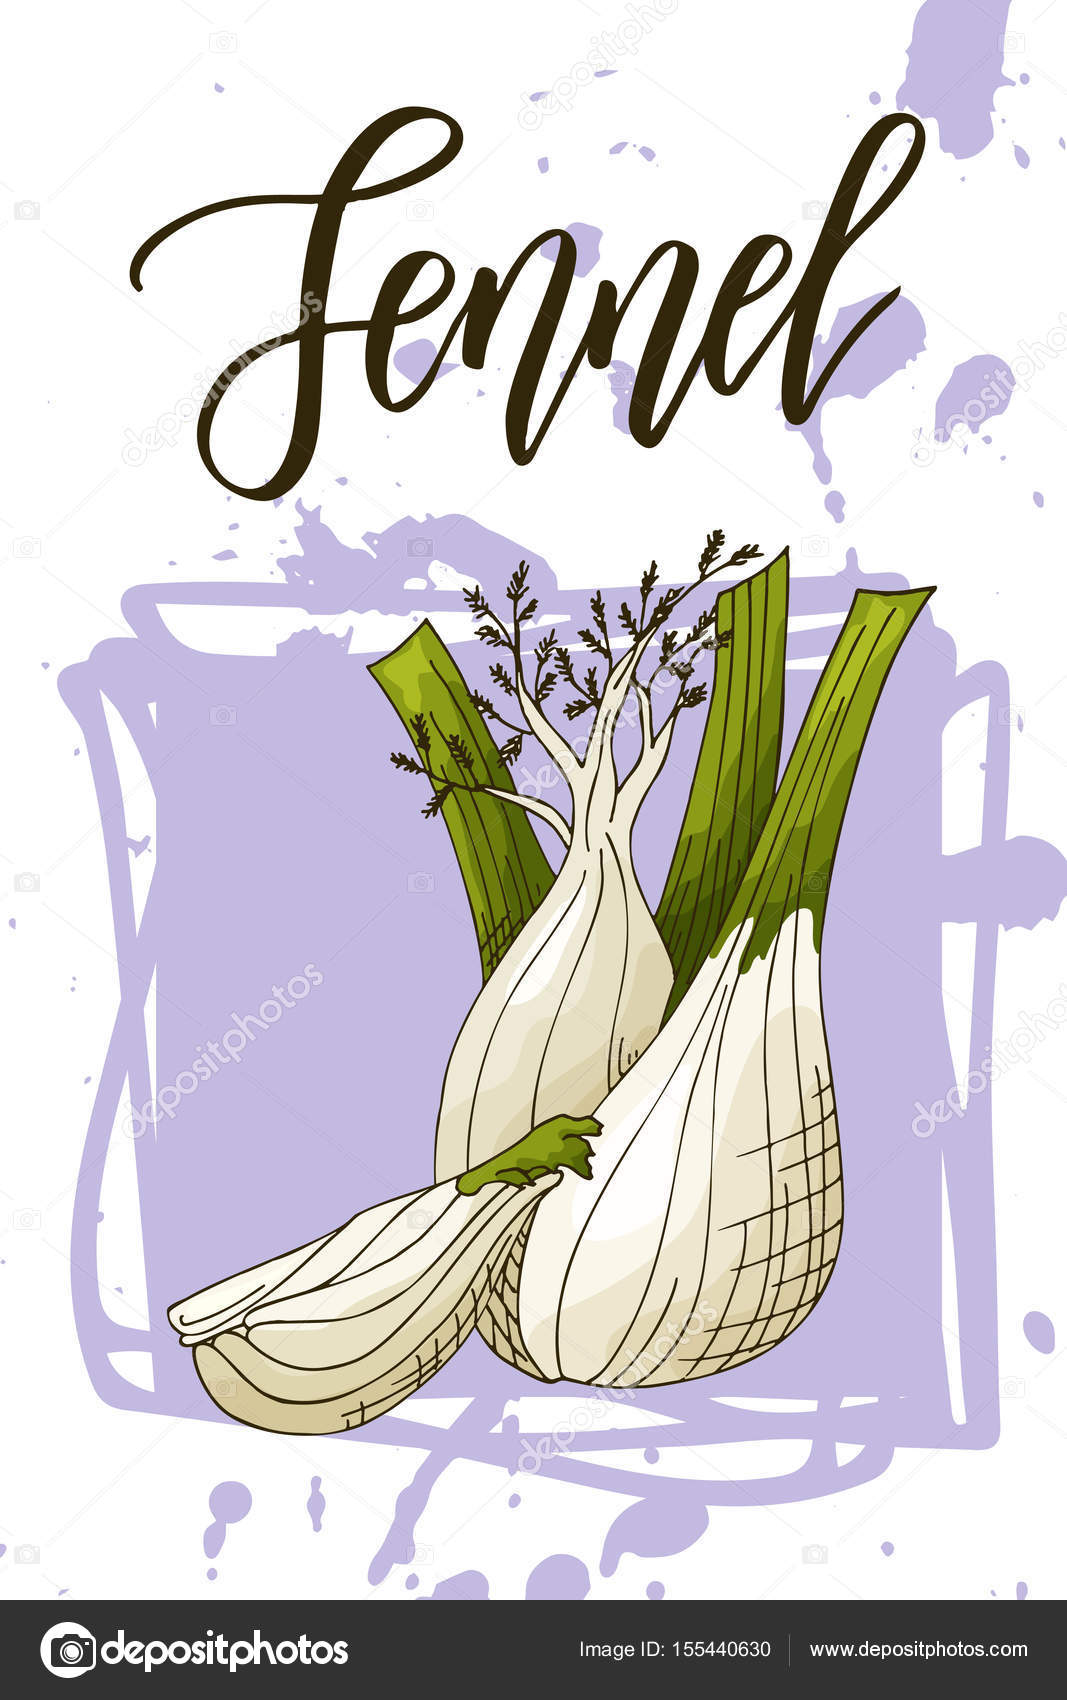 Fennel seed Vectors, Clipart & Illustrations for Free Download - illustAC